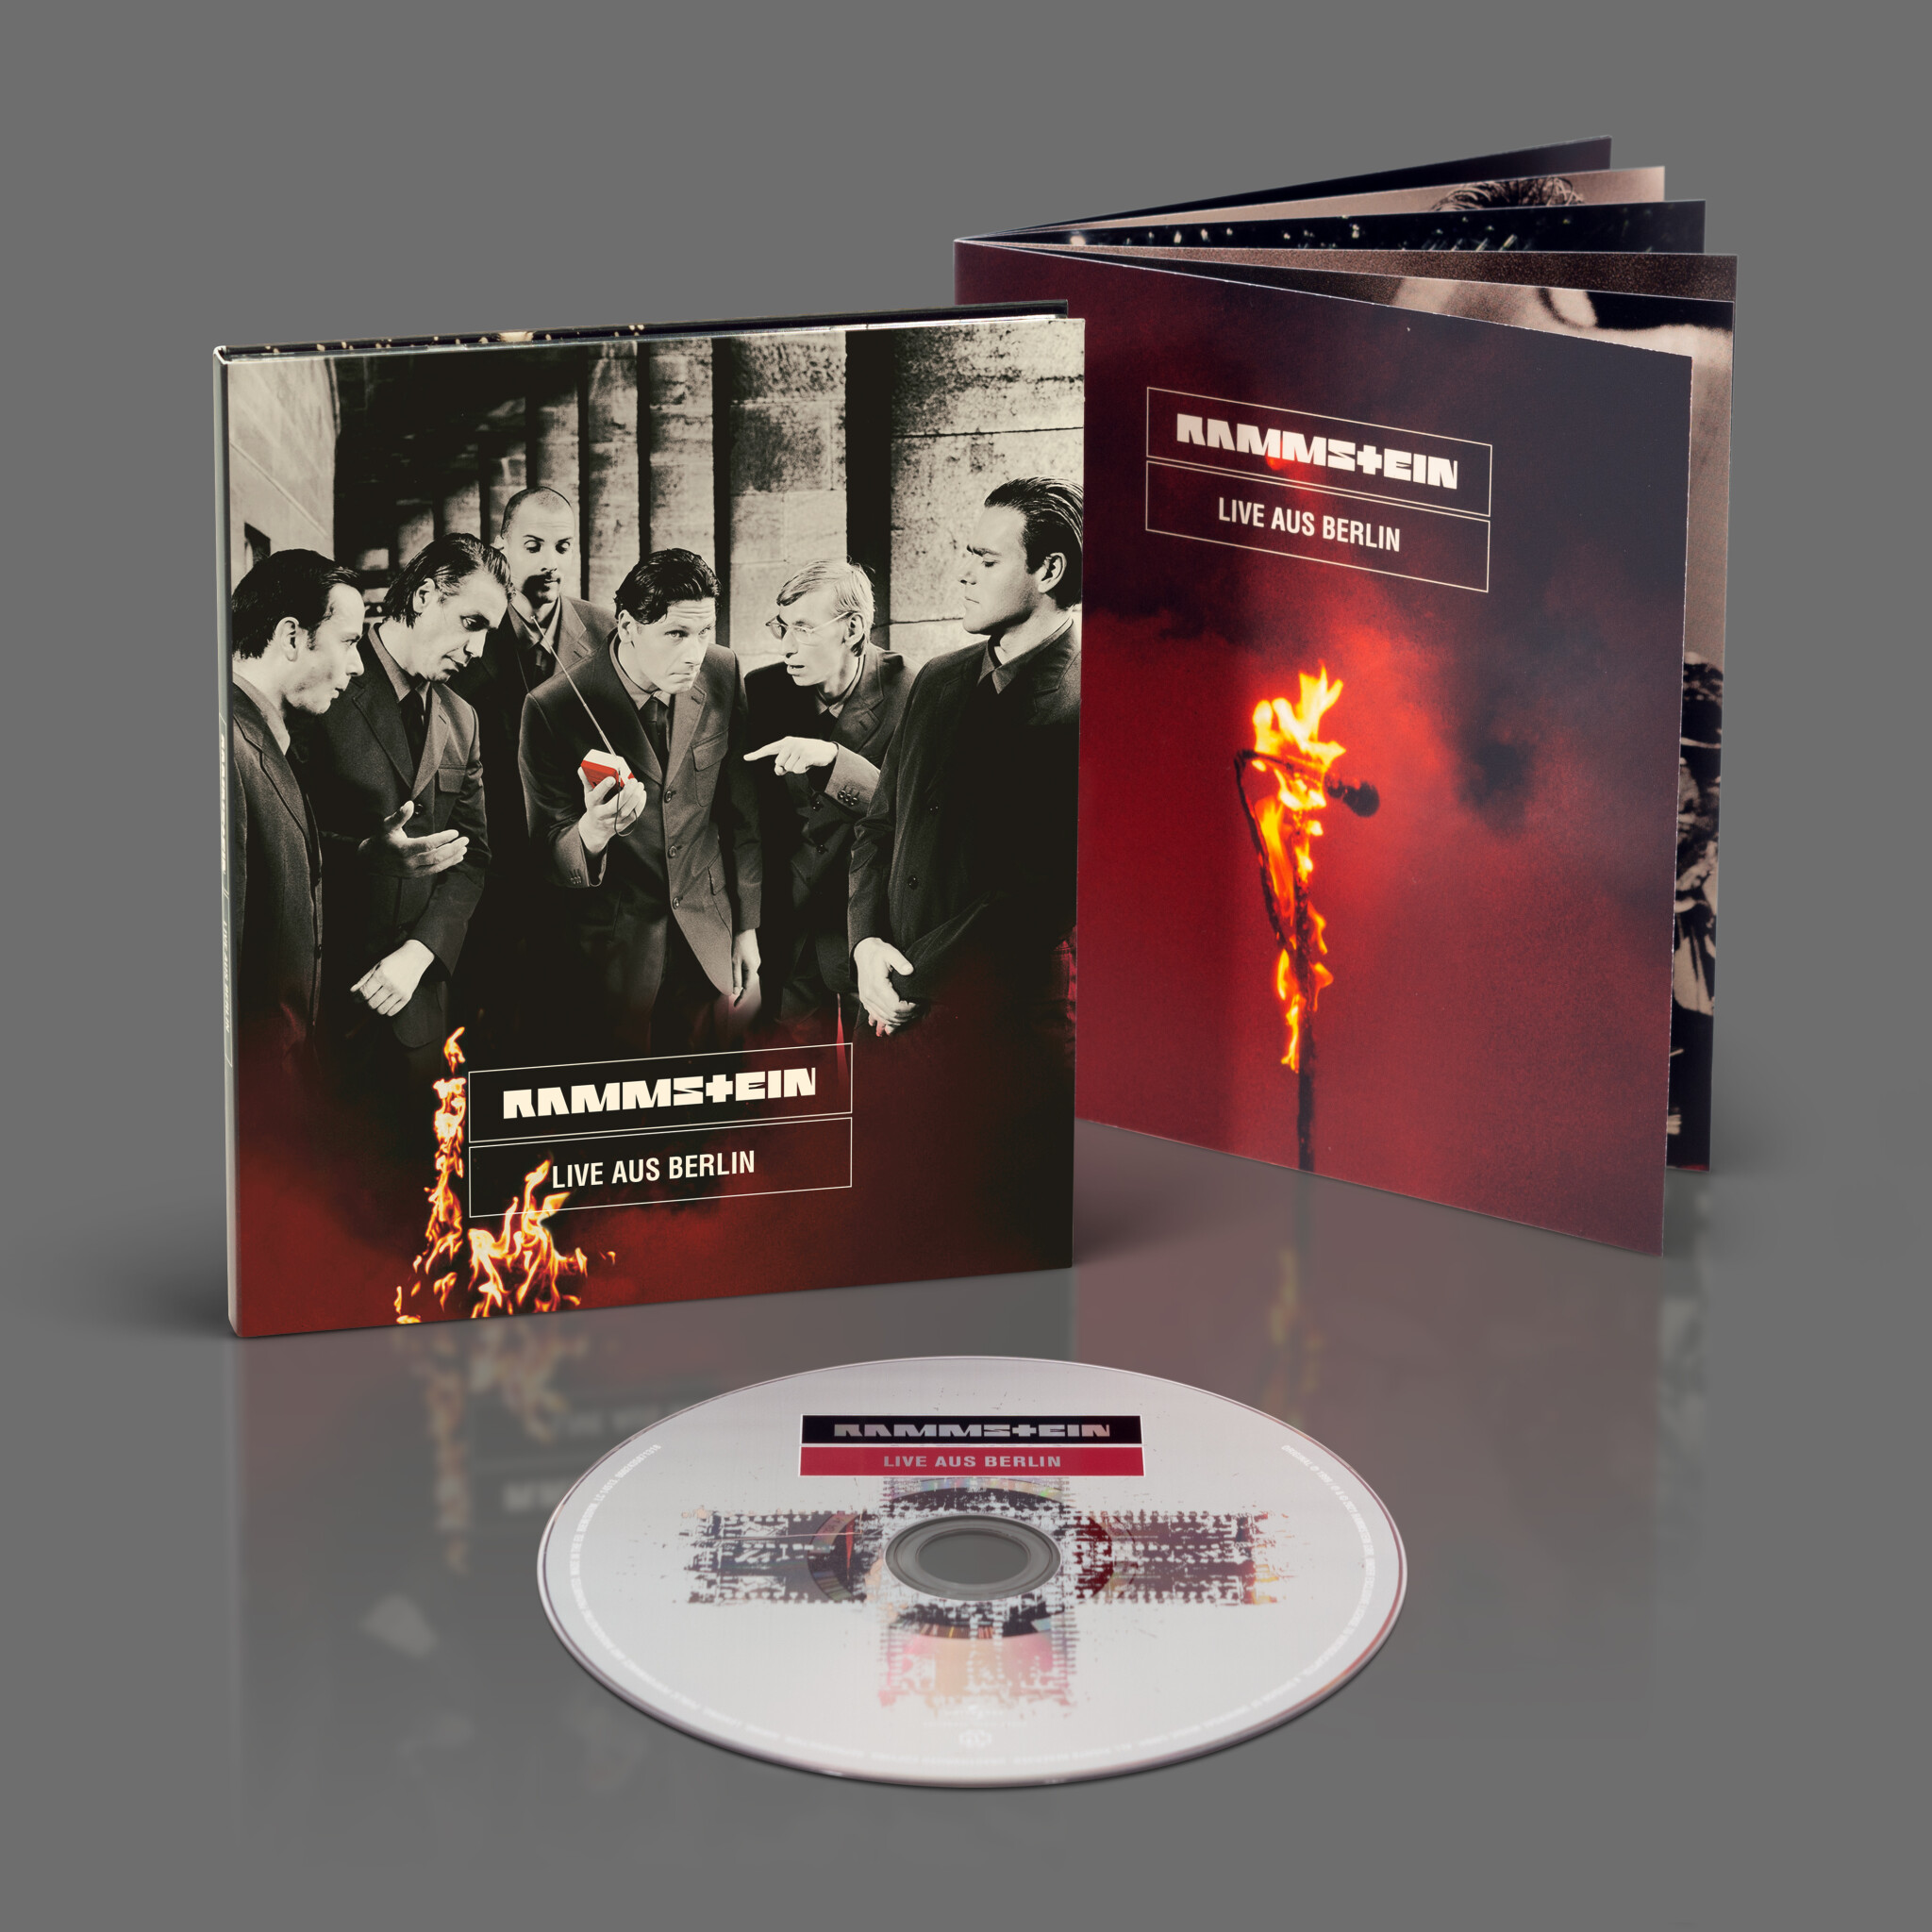 Rammstein Concert Album ”Live aus Berlin”, CD